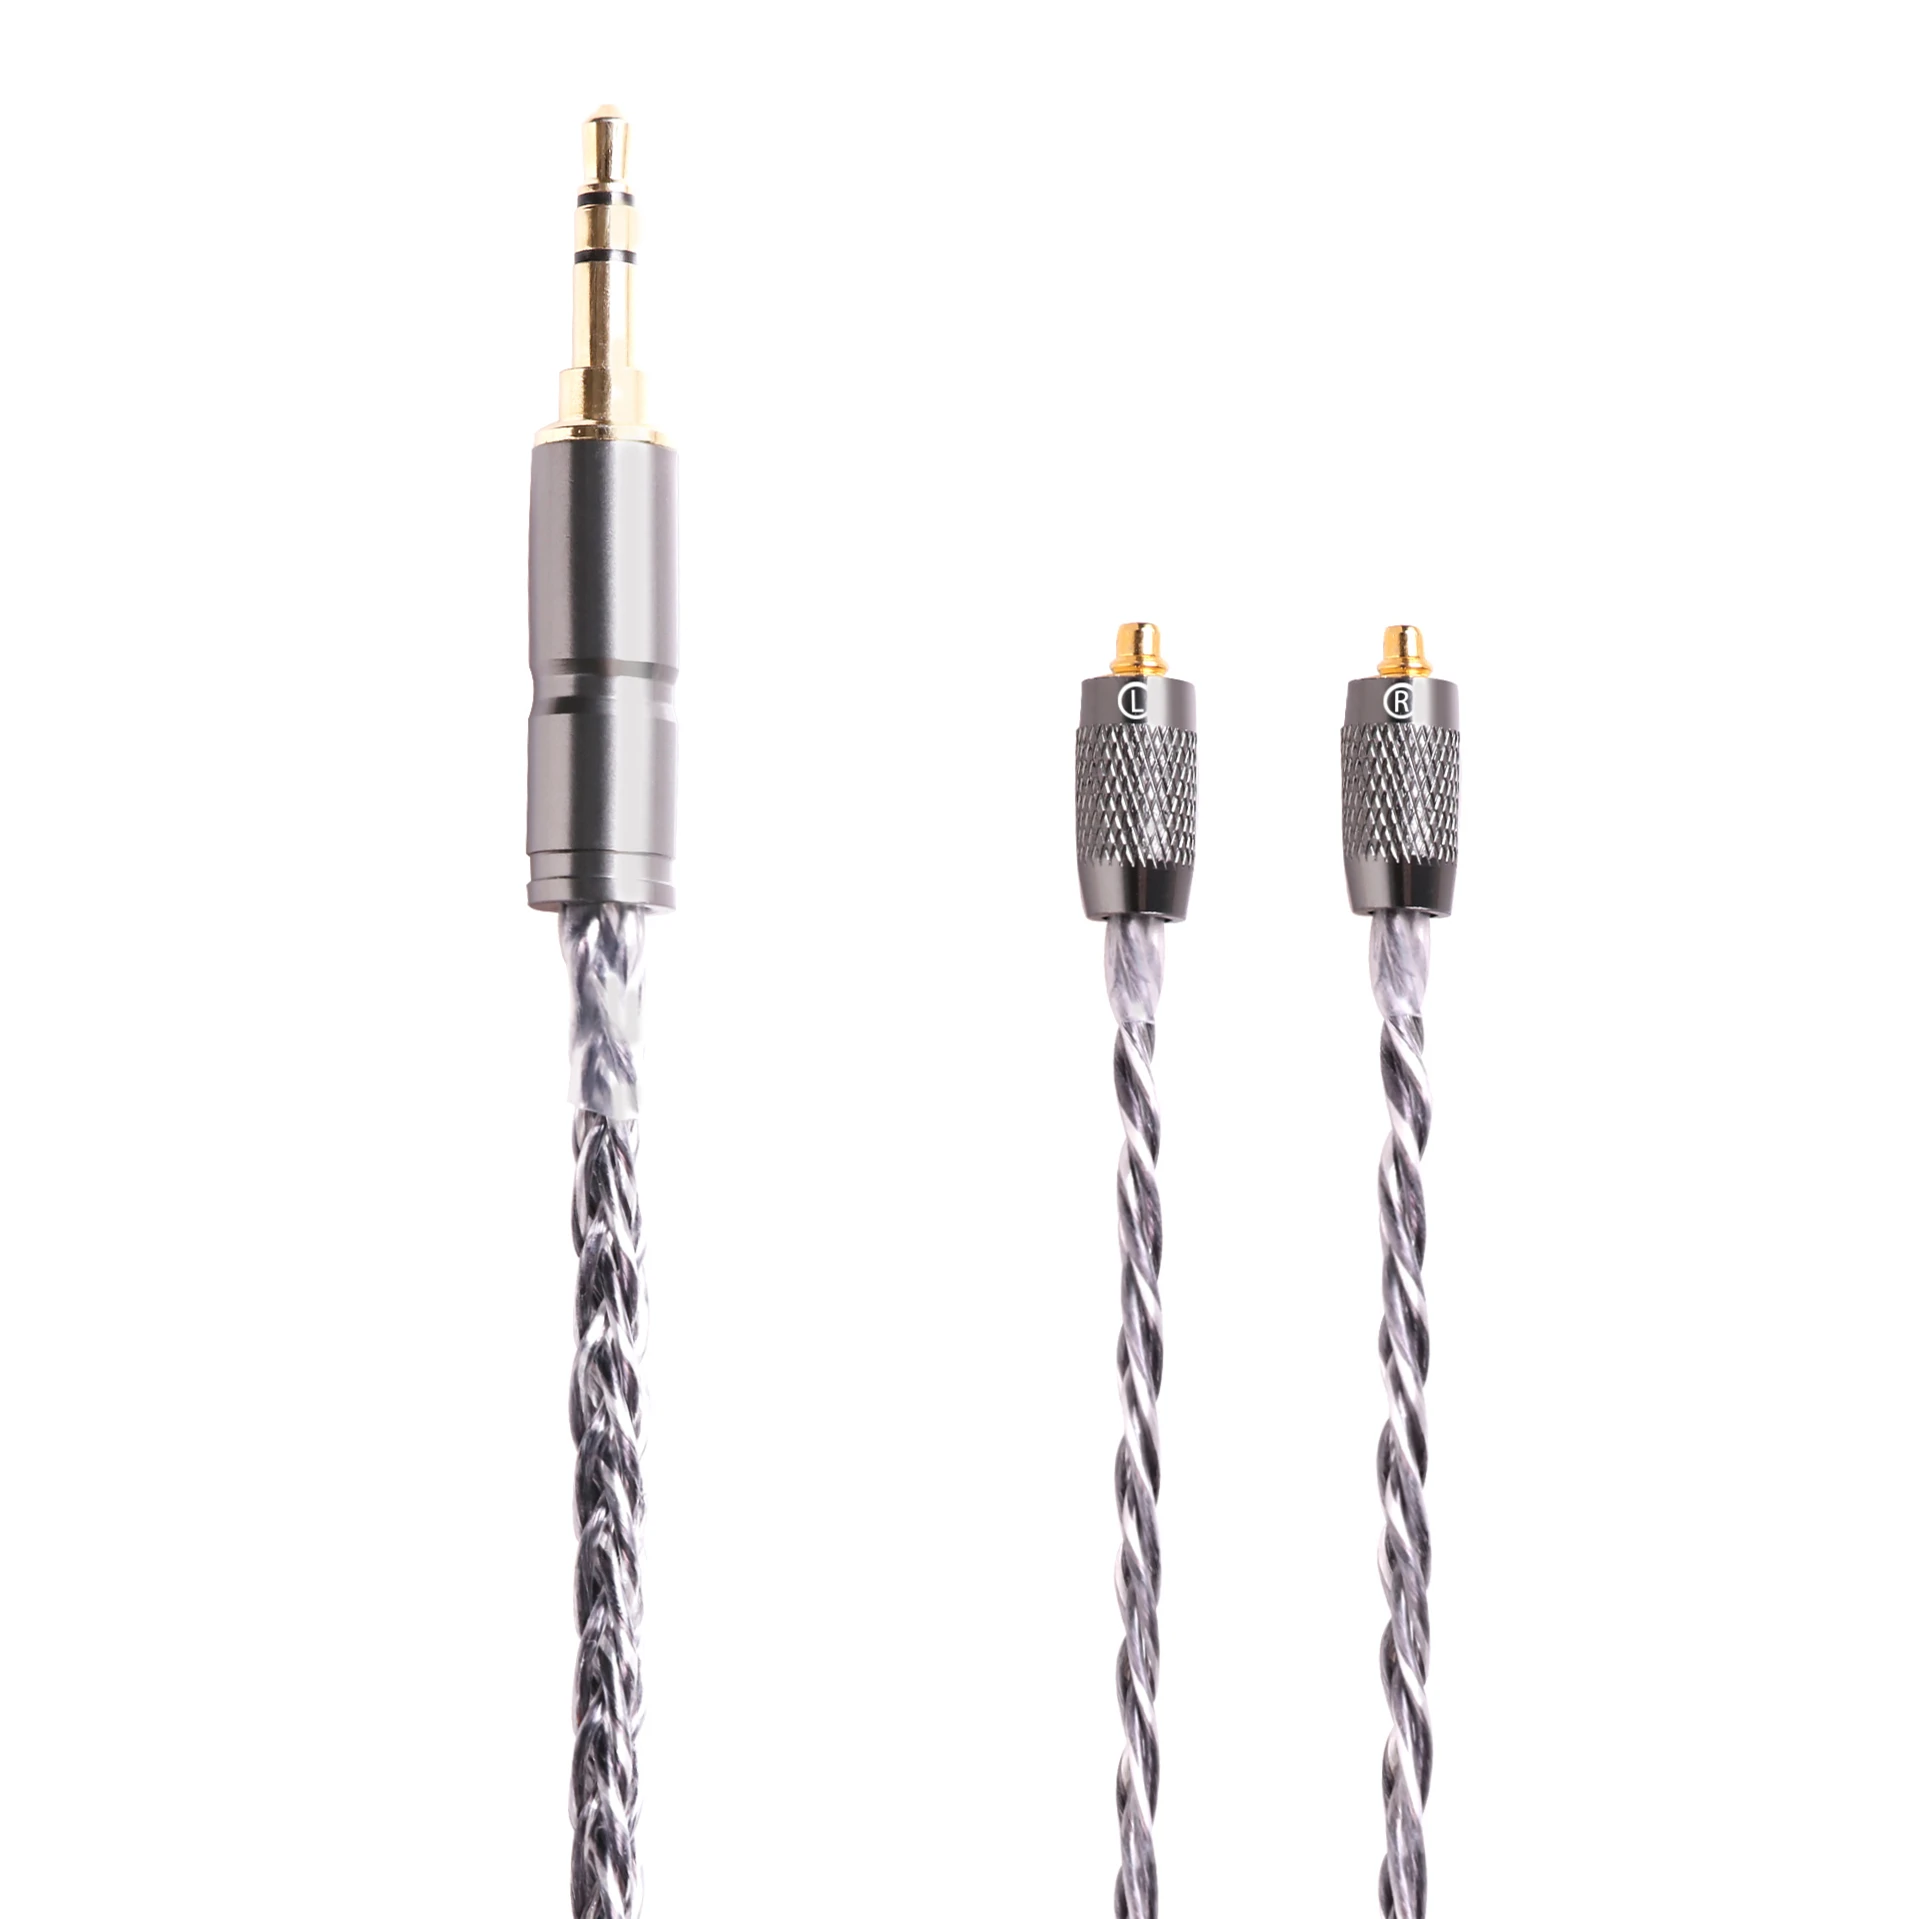 Kábel de auriculares BGVP 8 jadro 6N 400 core OCC cristal único cobre Chapado sk plata HIFI auriculares actualización MMCX kábel